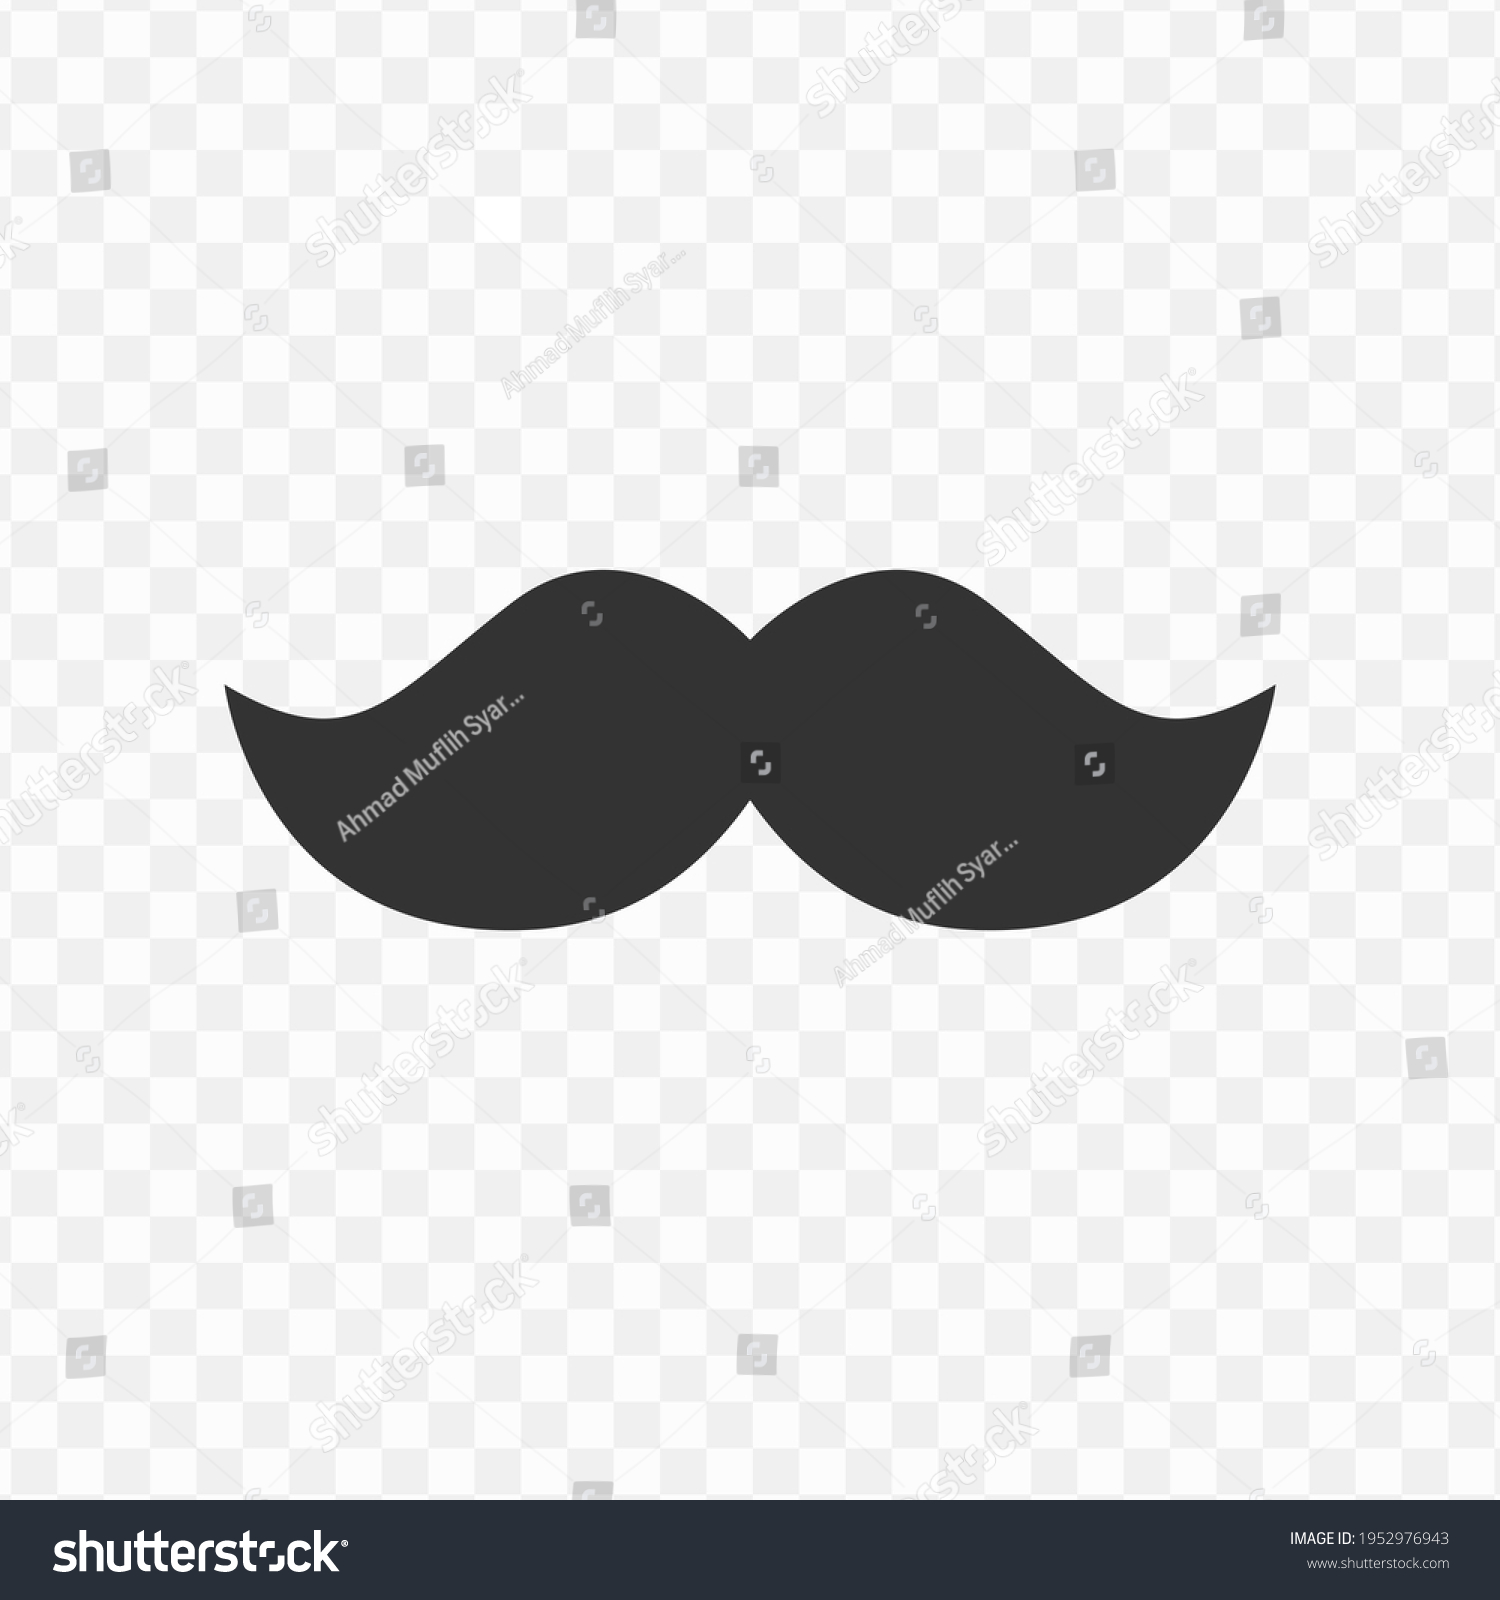 2,057 Mustache on transparent Stock Illustrations, Images & Vectors ...